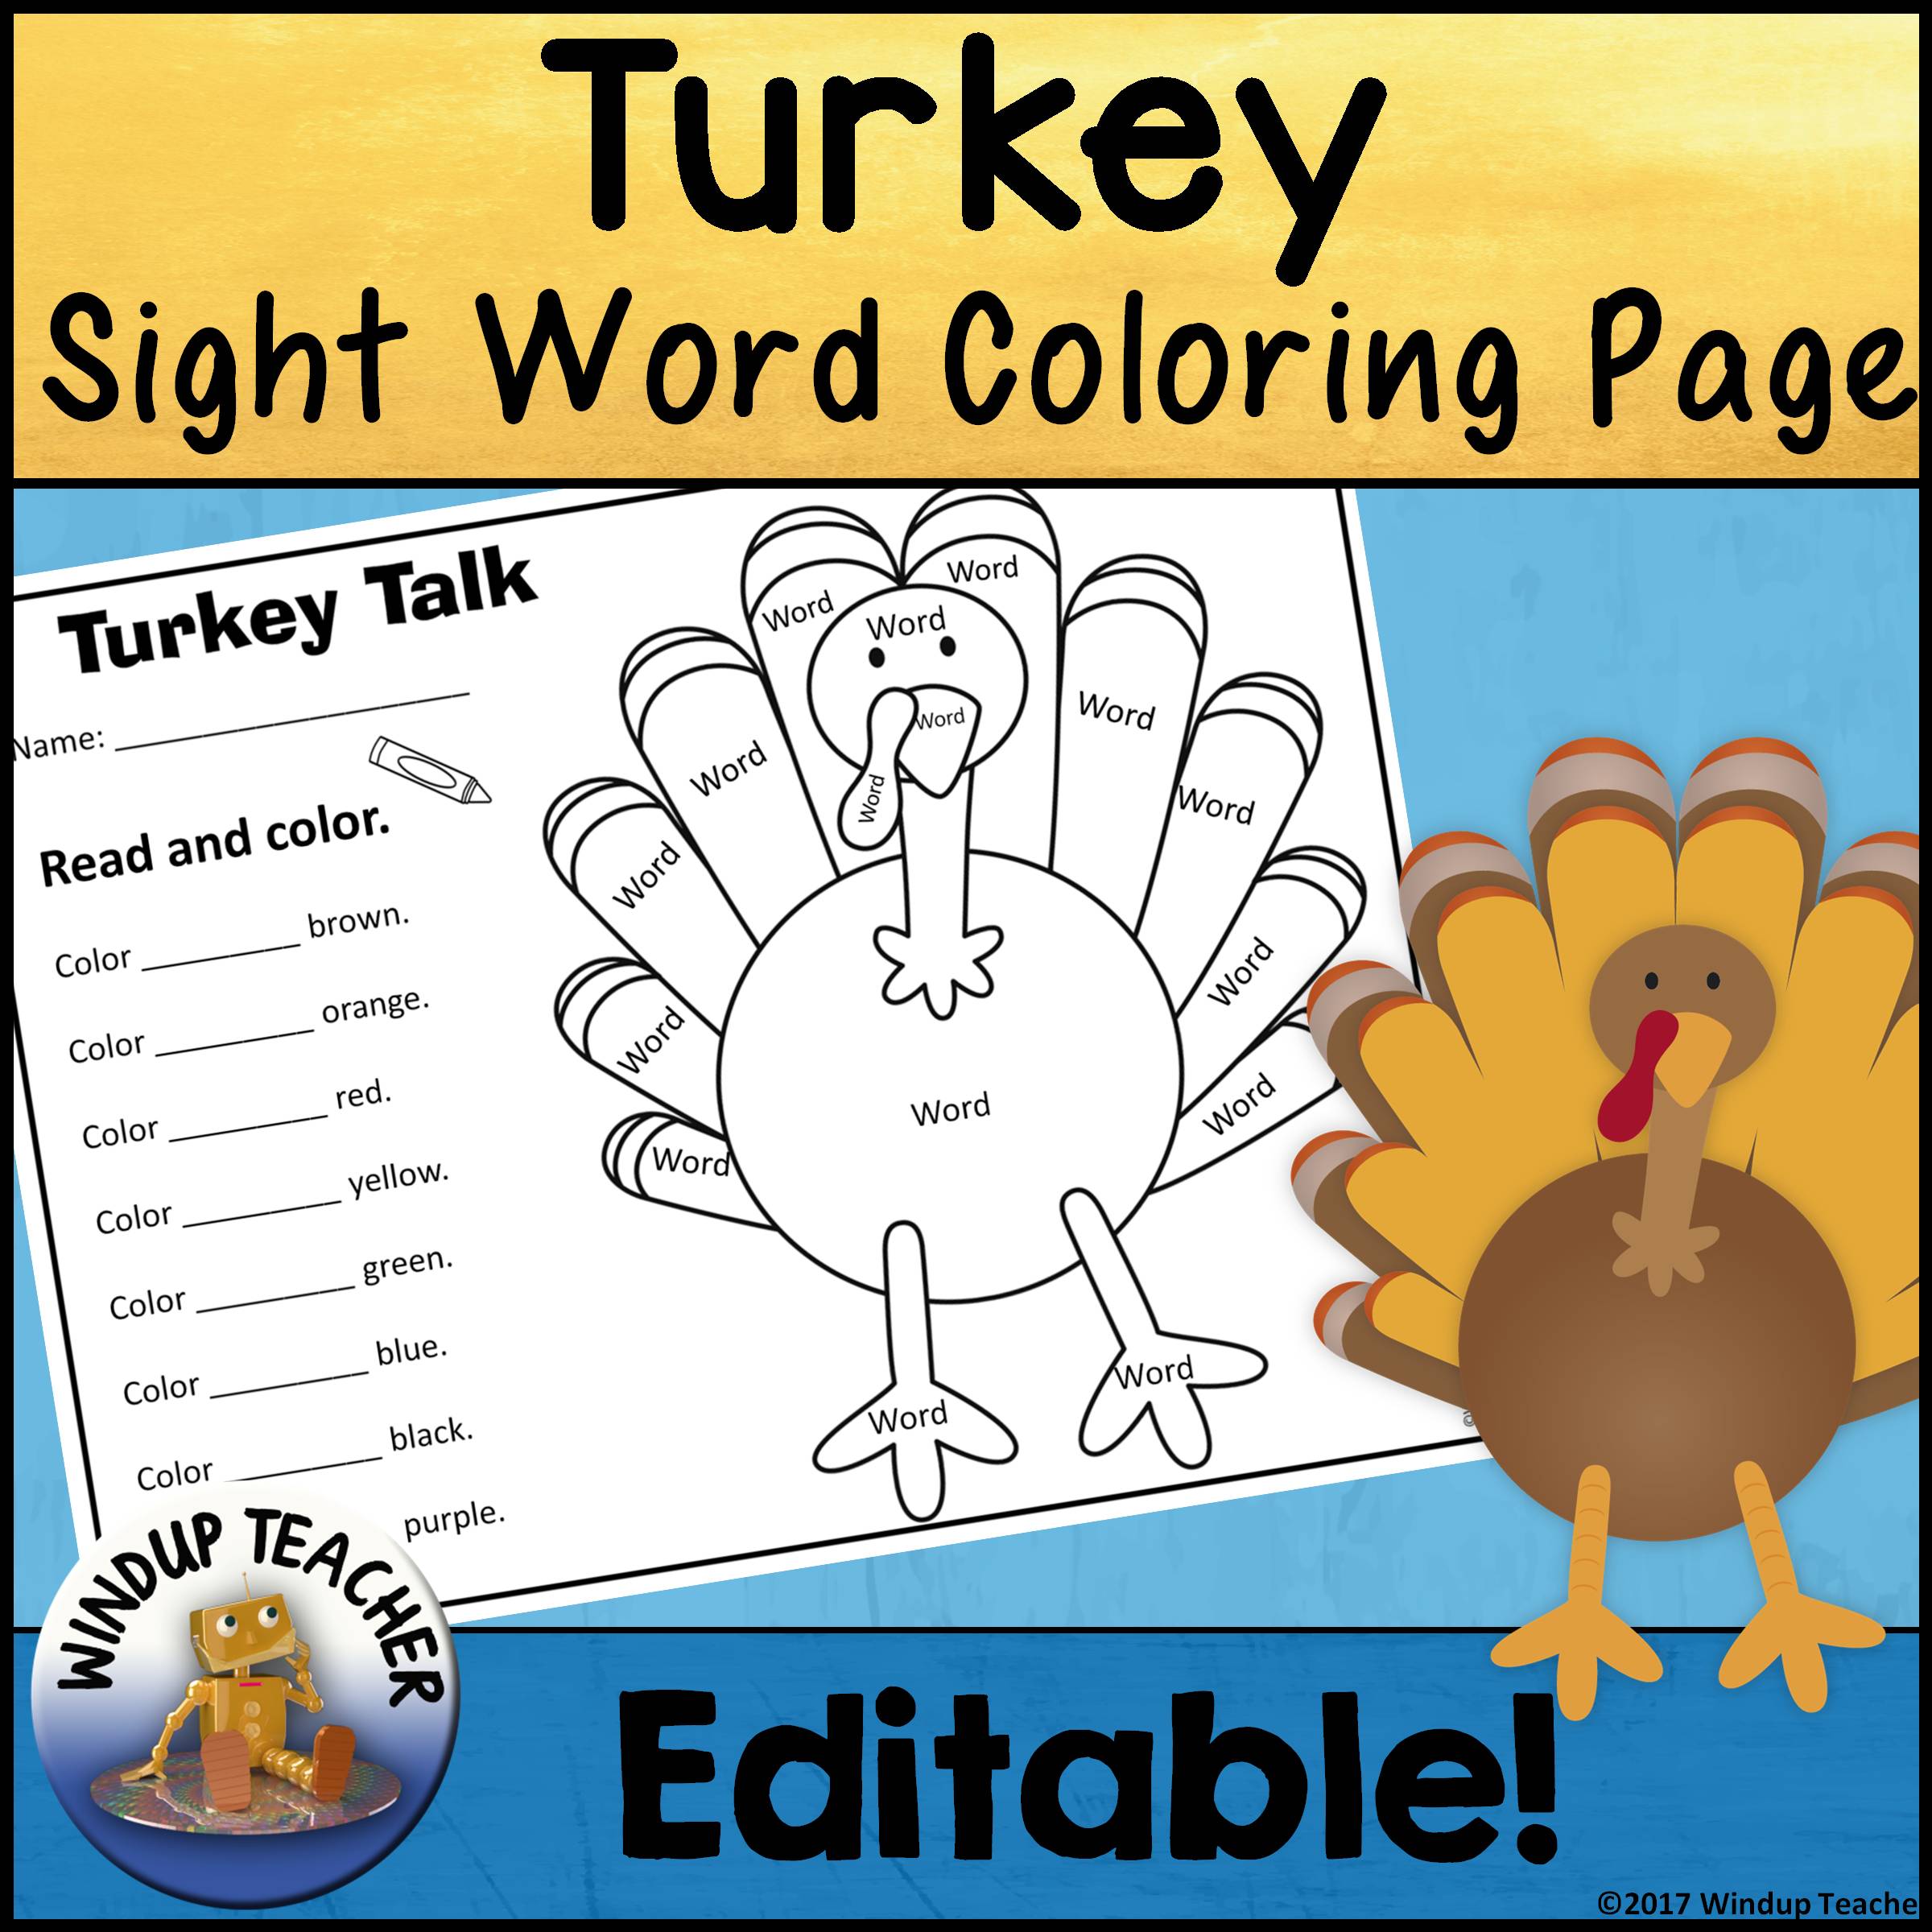 Turkey sight word coloring sheet activity